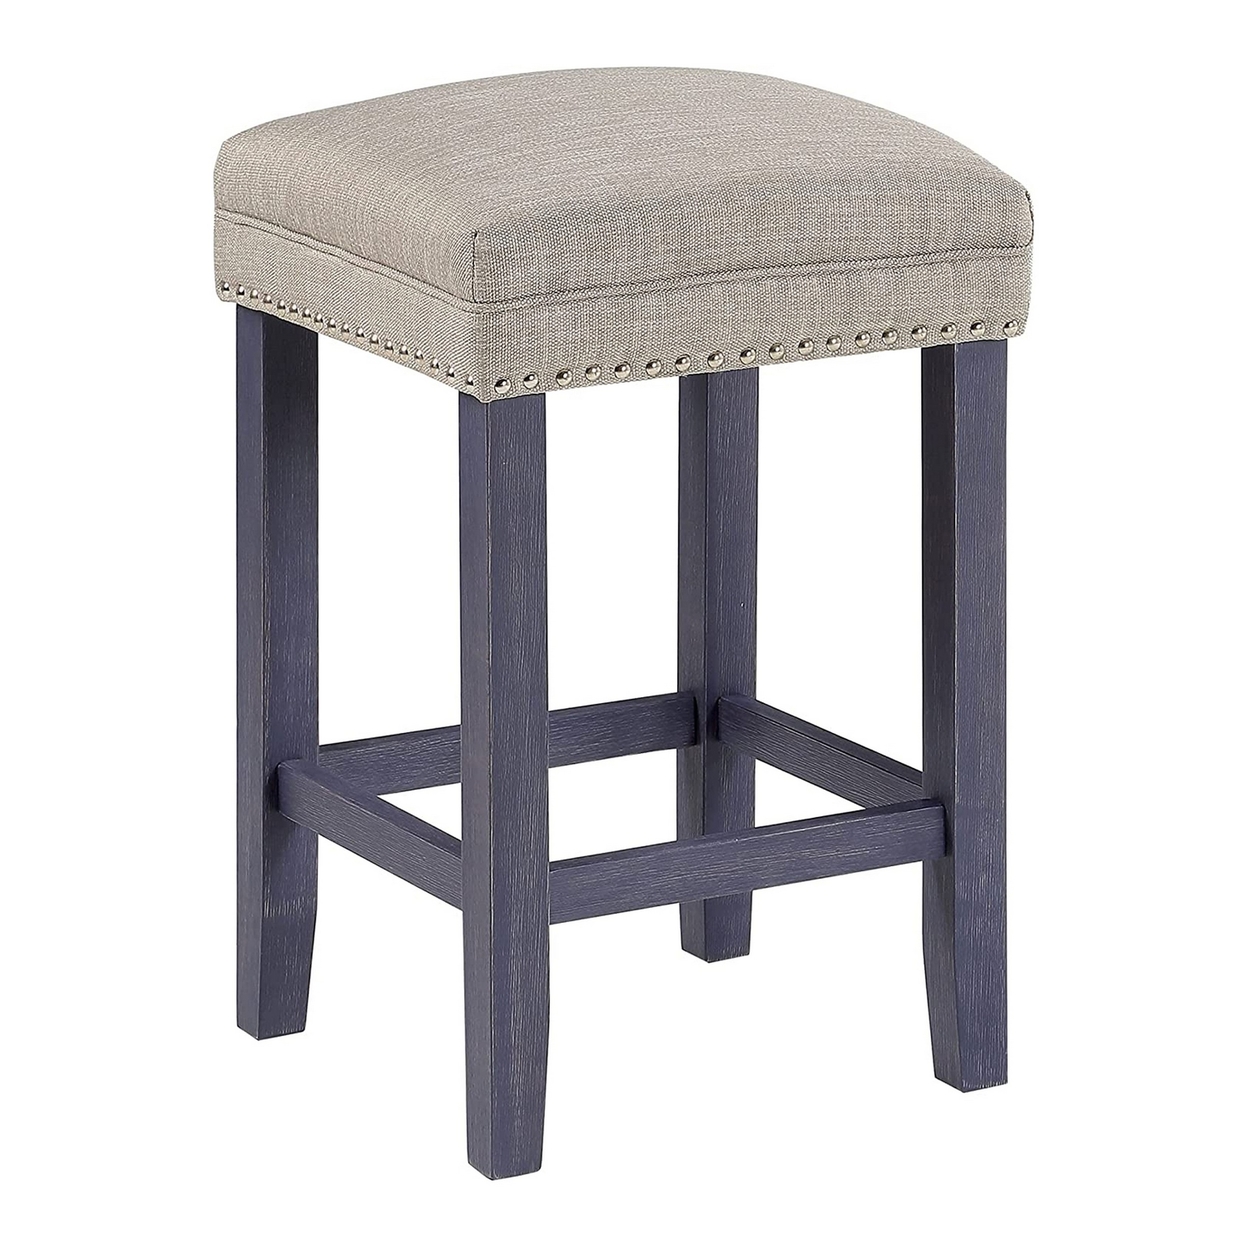 Eala 4 Piece Counter Height Table And Stool Set, Blue Wood, Gray Fabric- Saltoro Sherpi